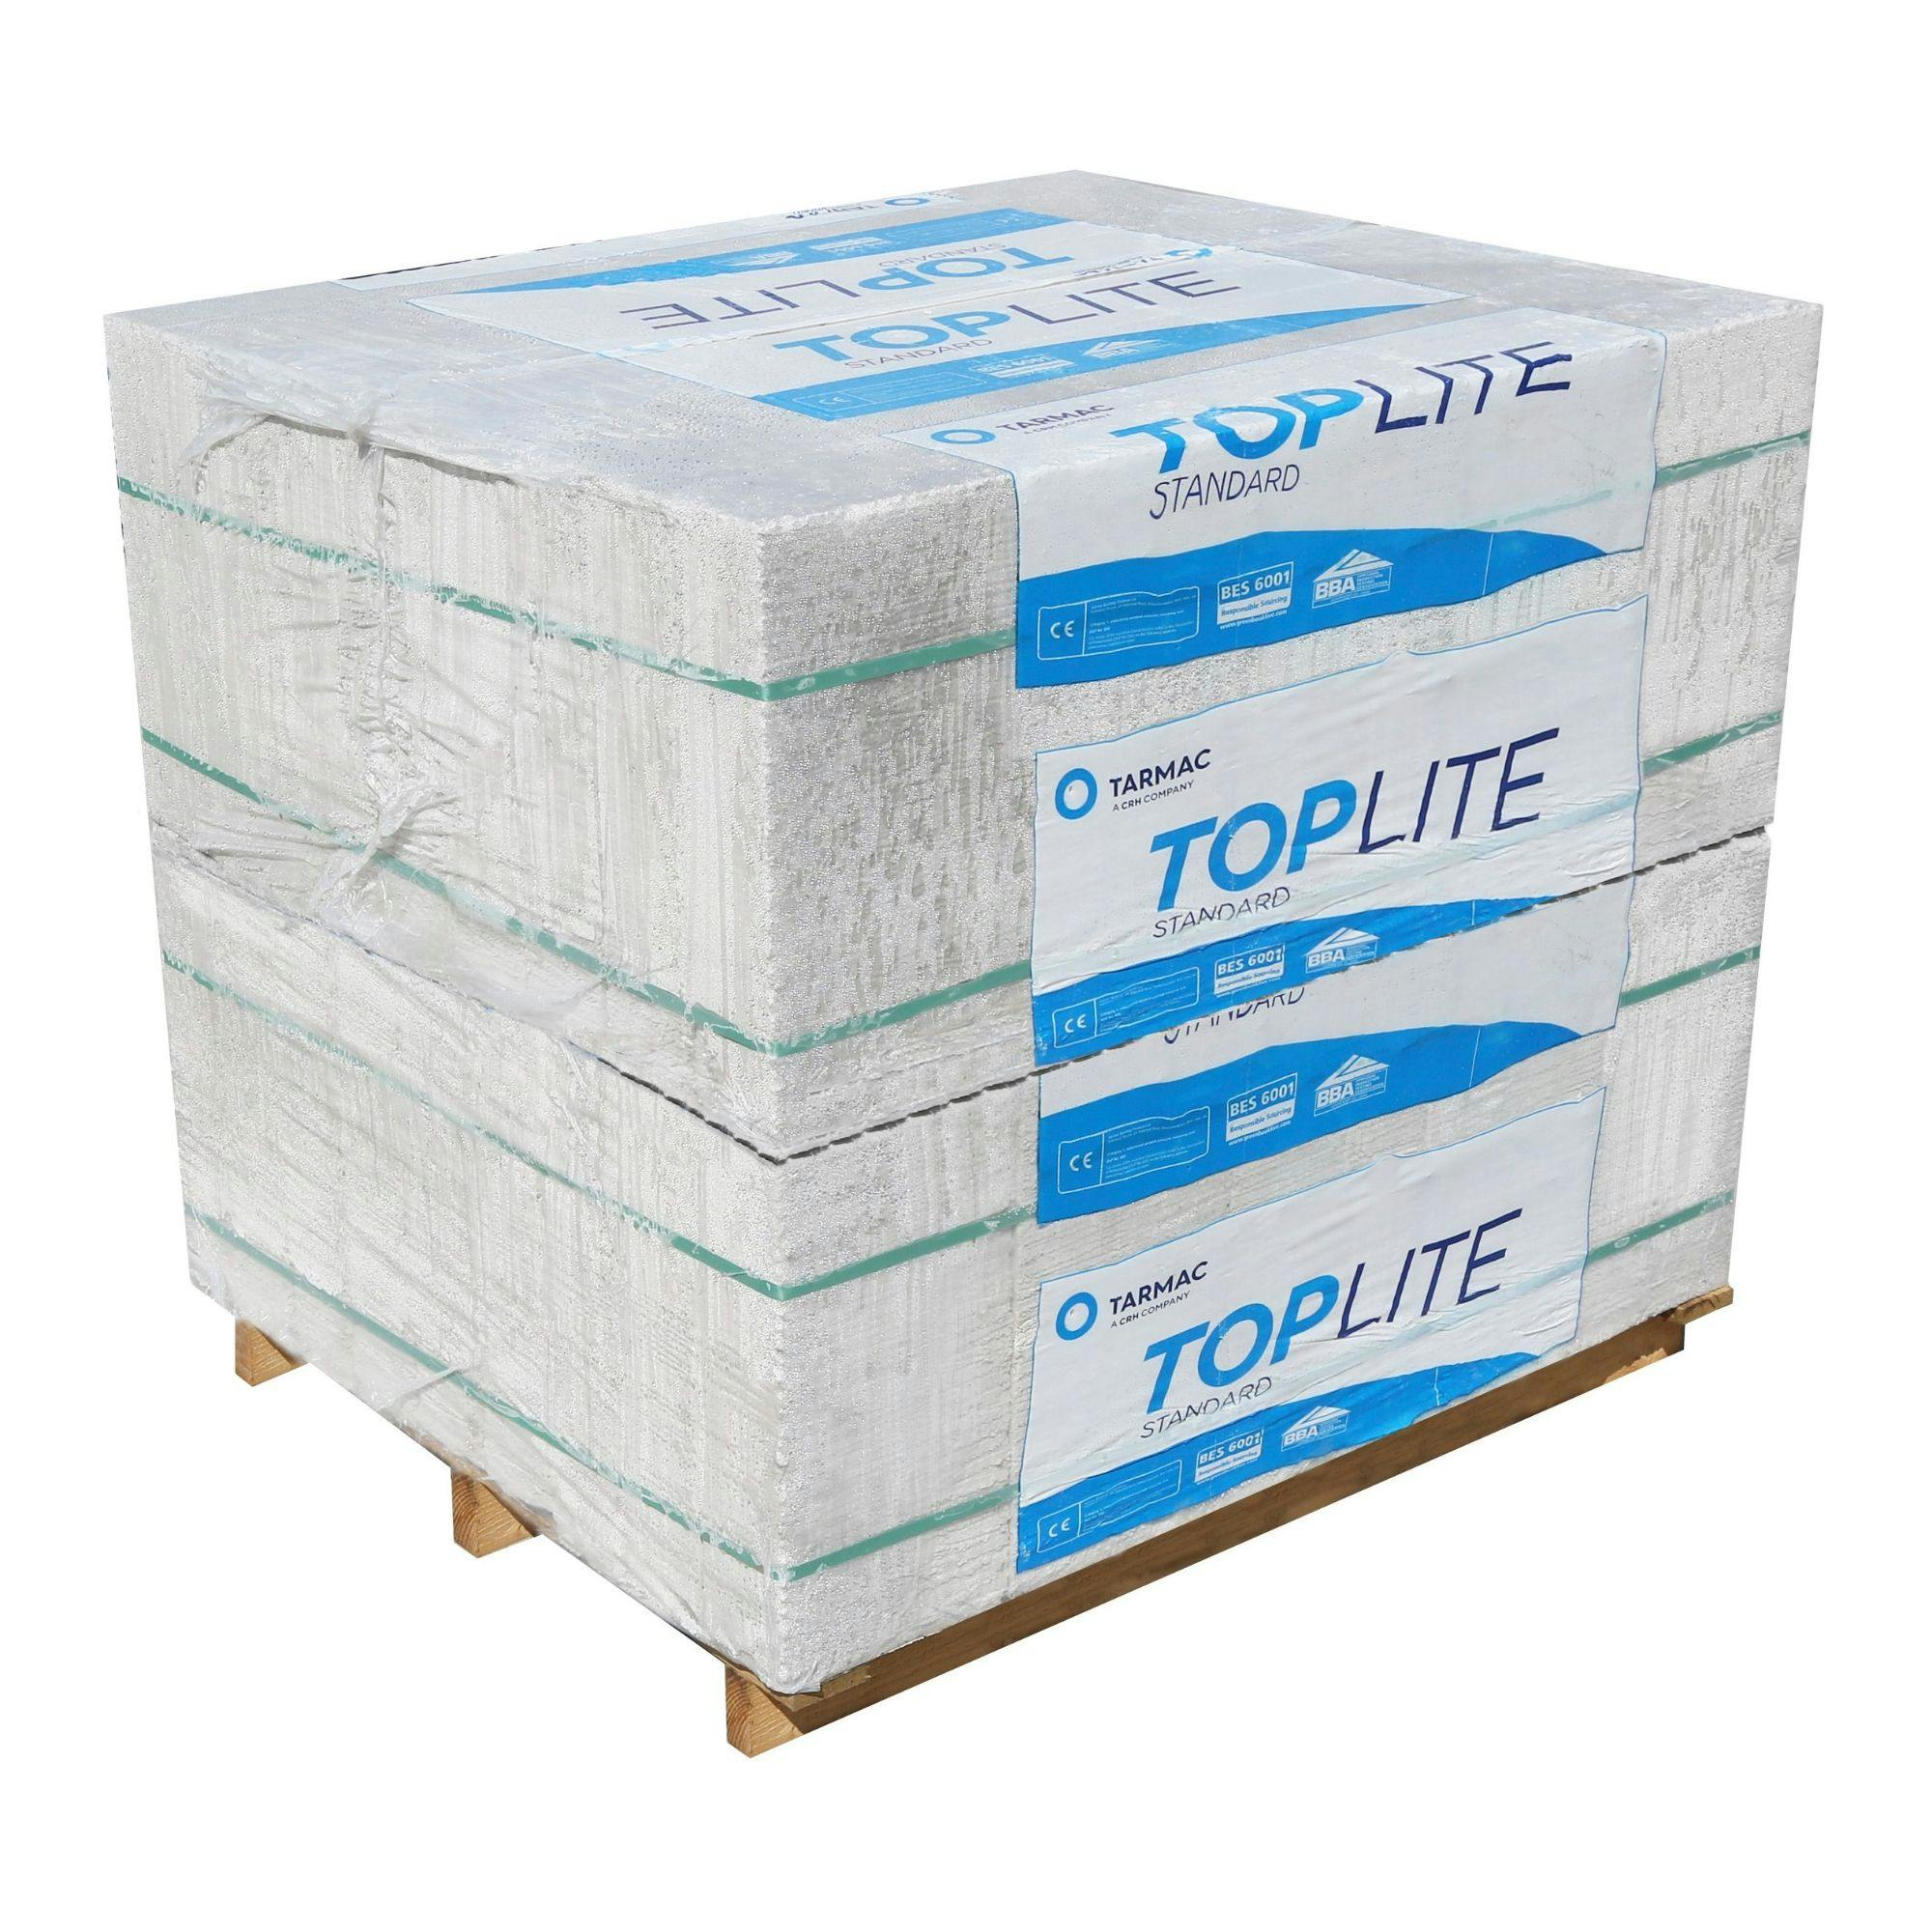 Tarmac Toplite Standard Aircrete Concrete Block (L)440mm, Pack Of 40